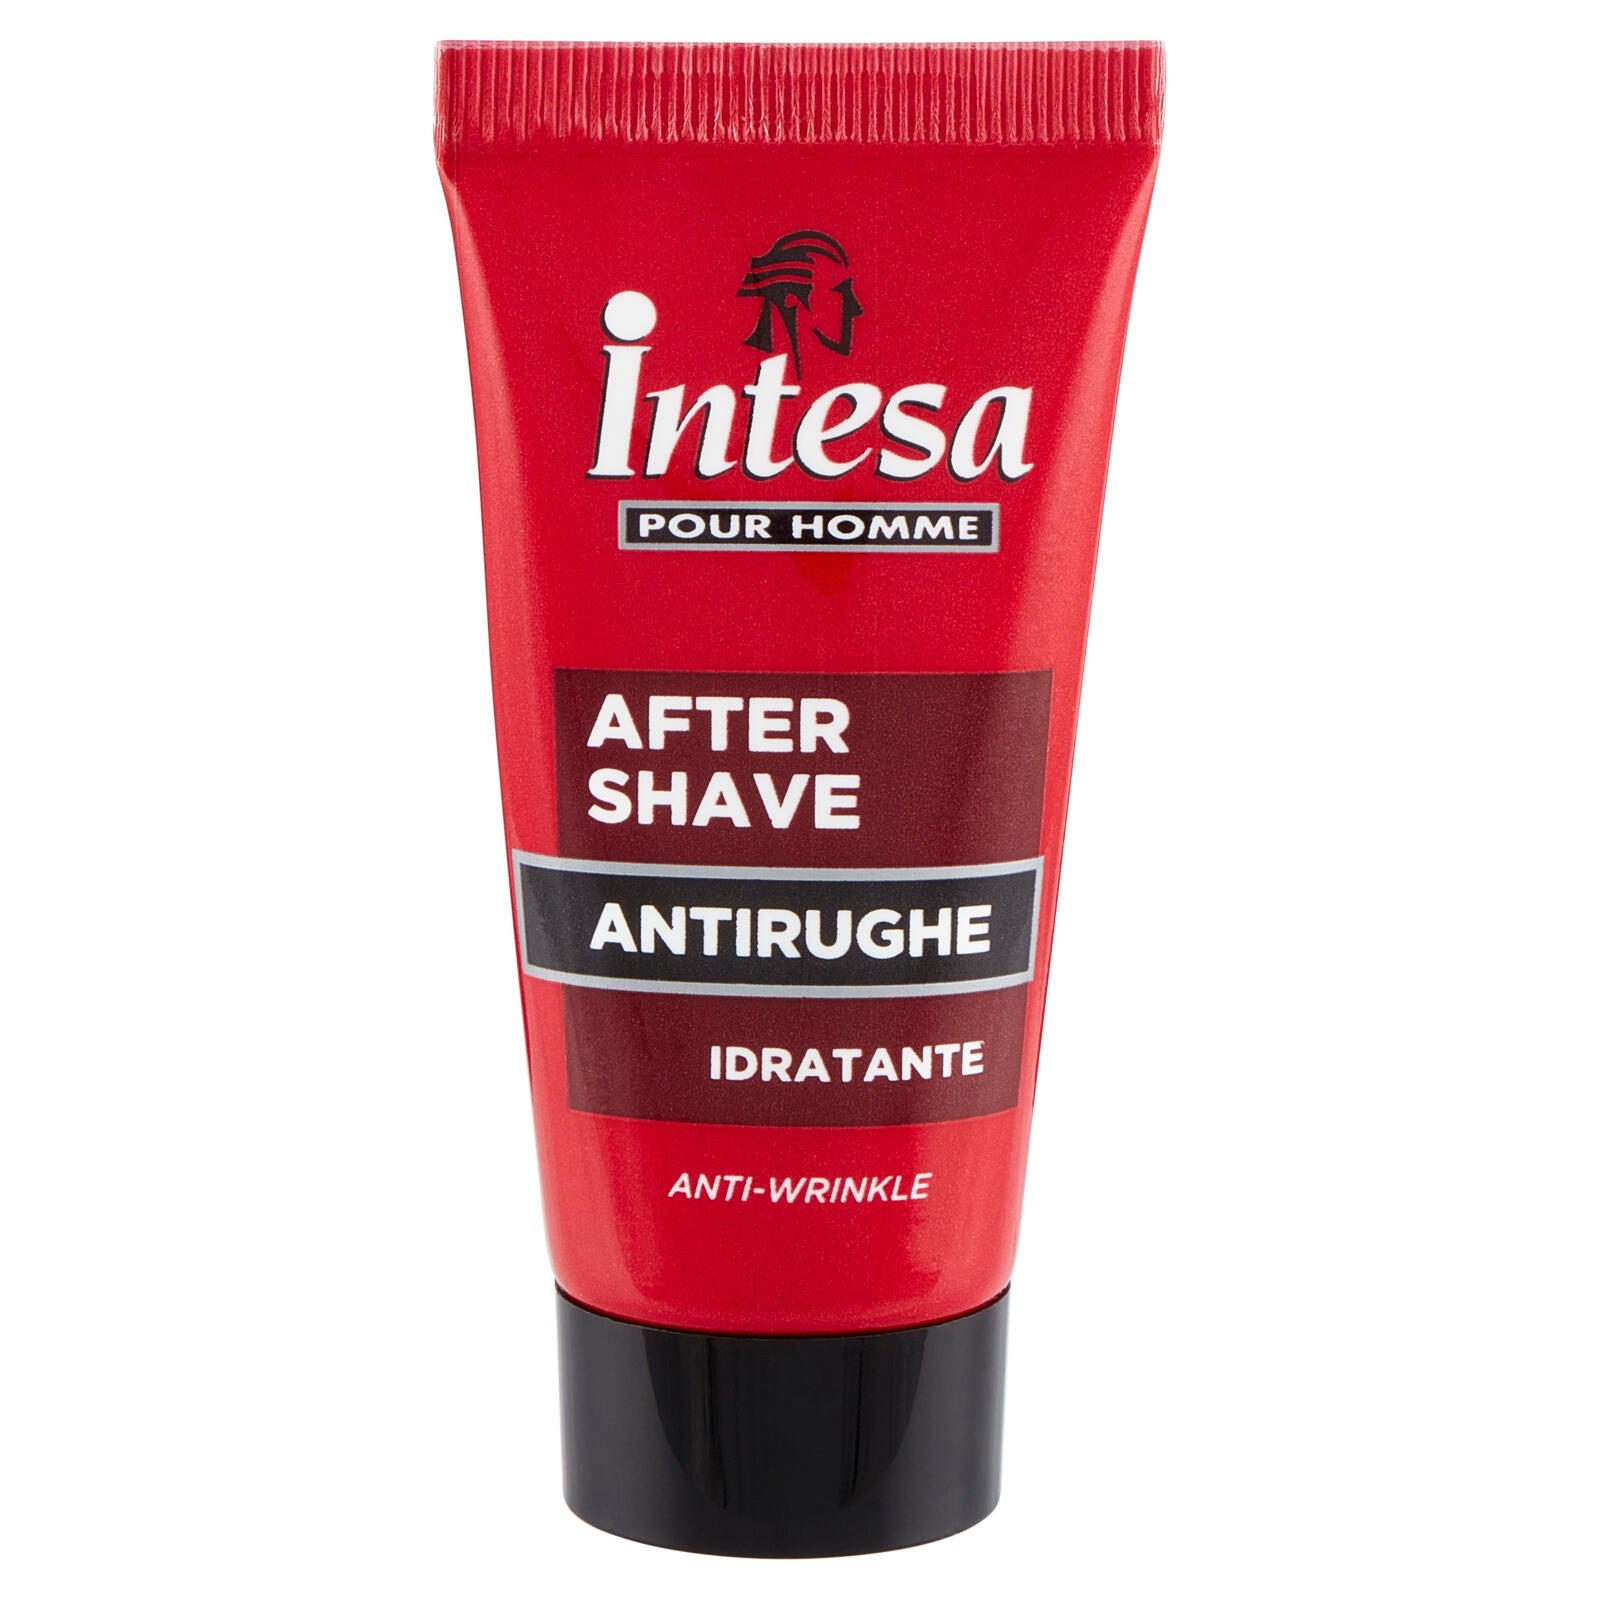 Intesa Pour Homme After Shave Antirughe Idratante 20 mL